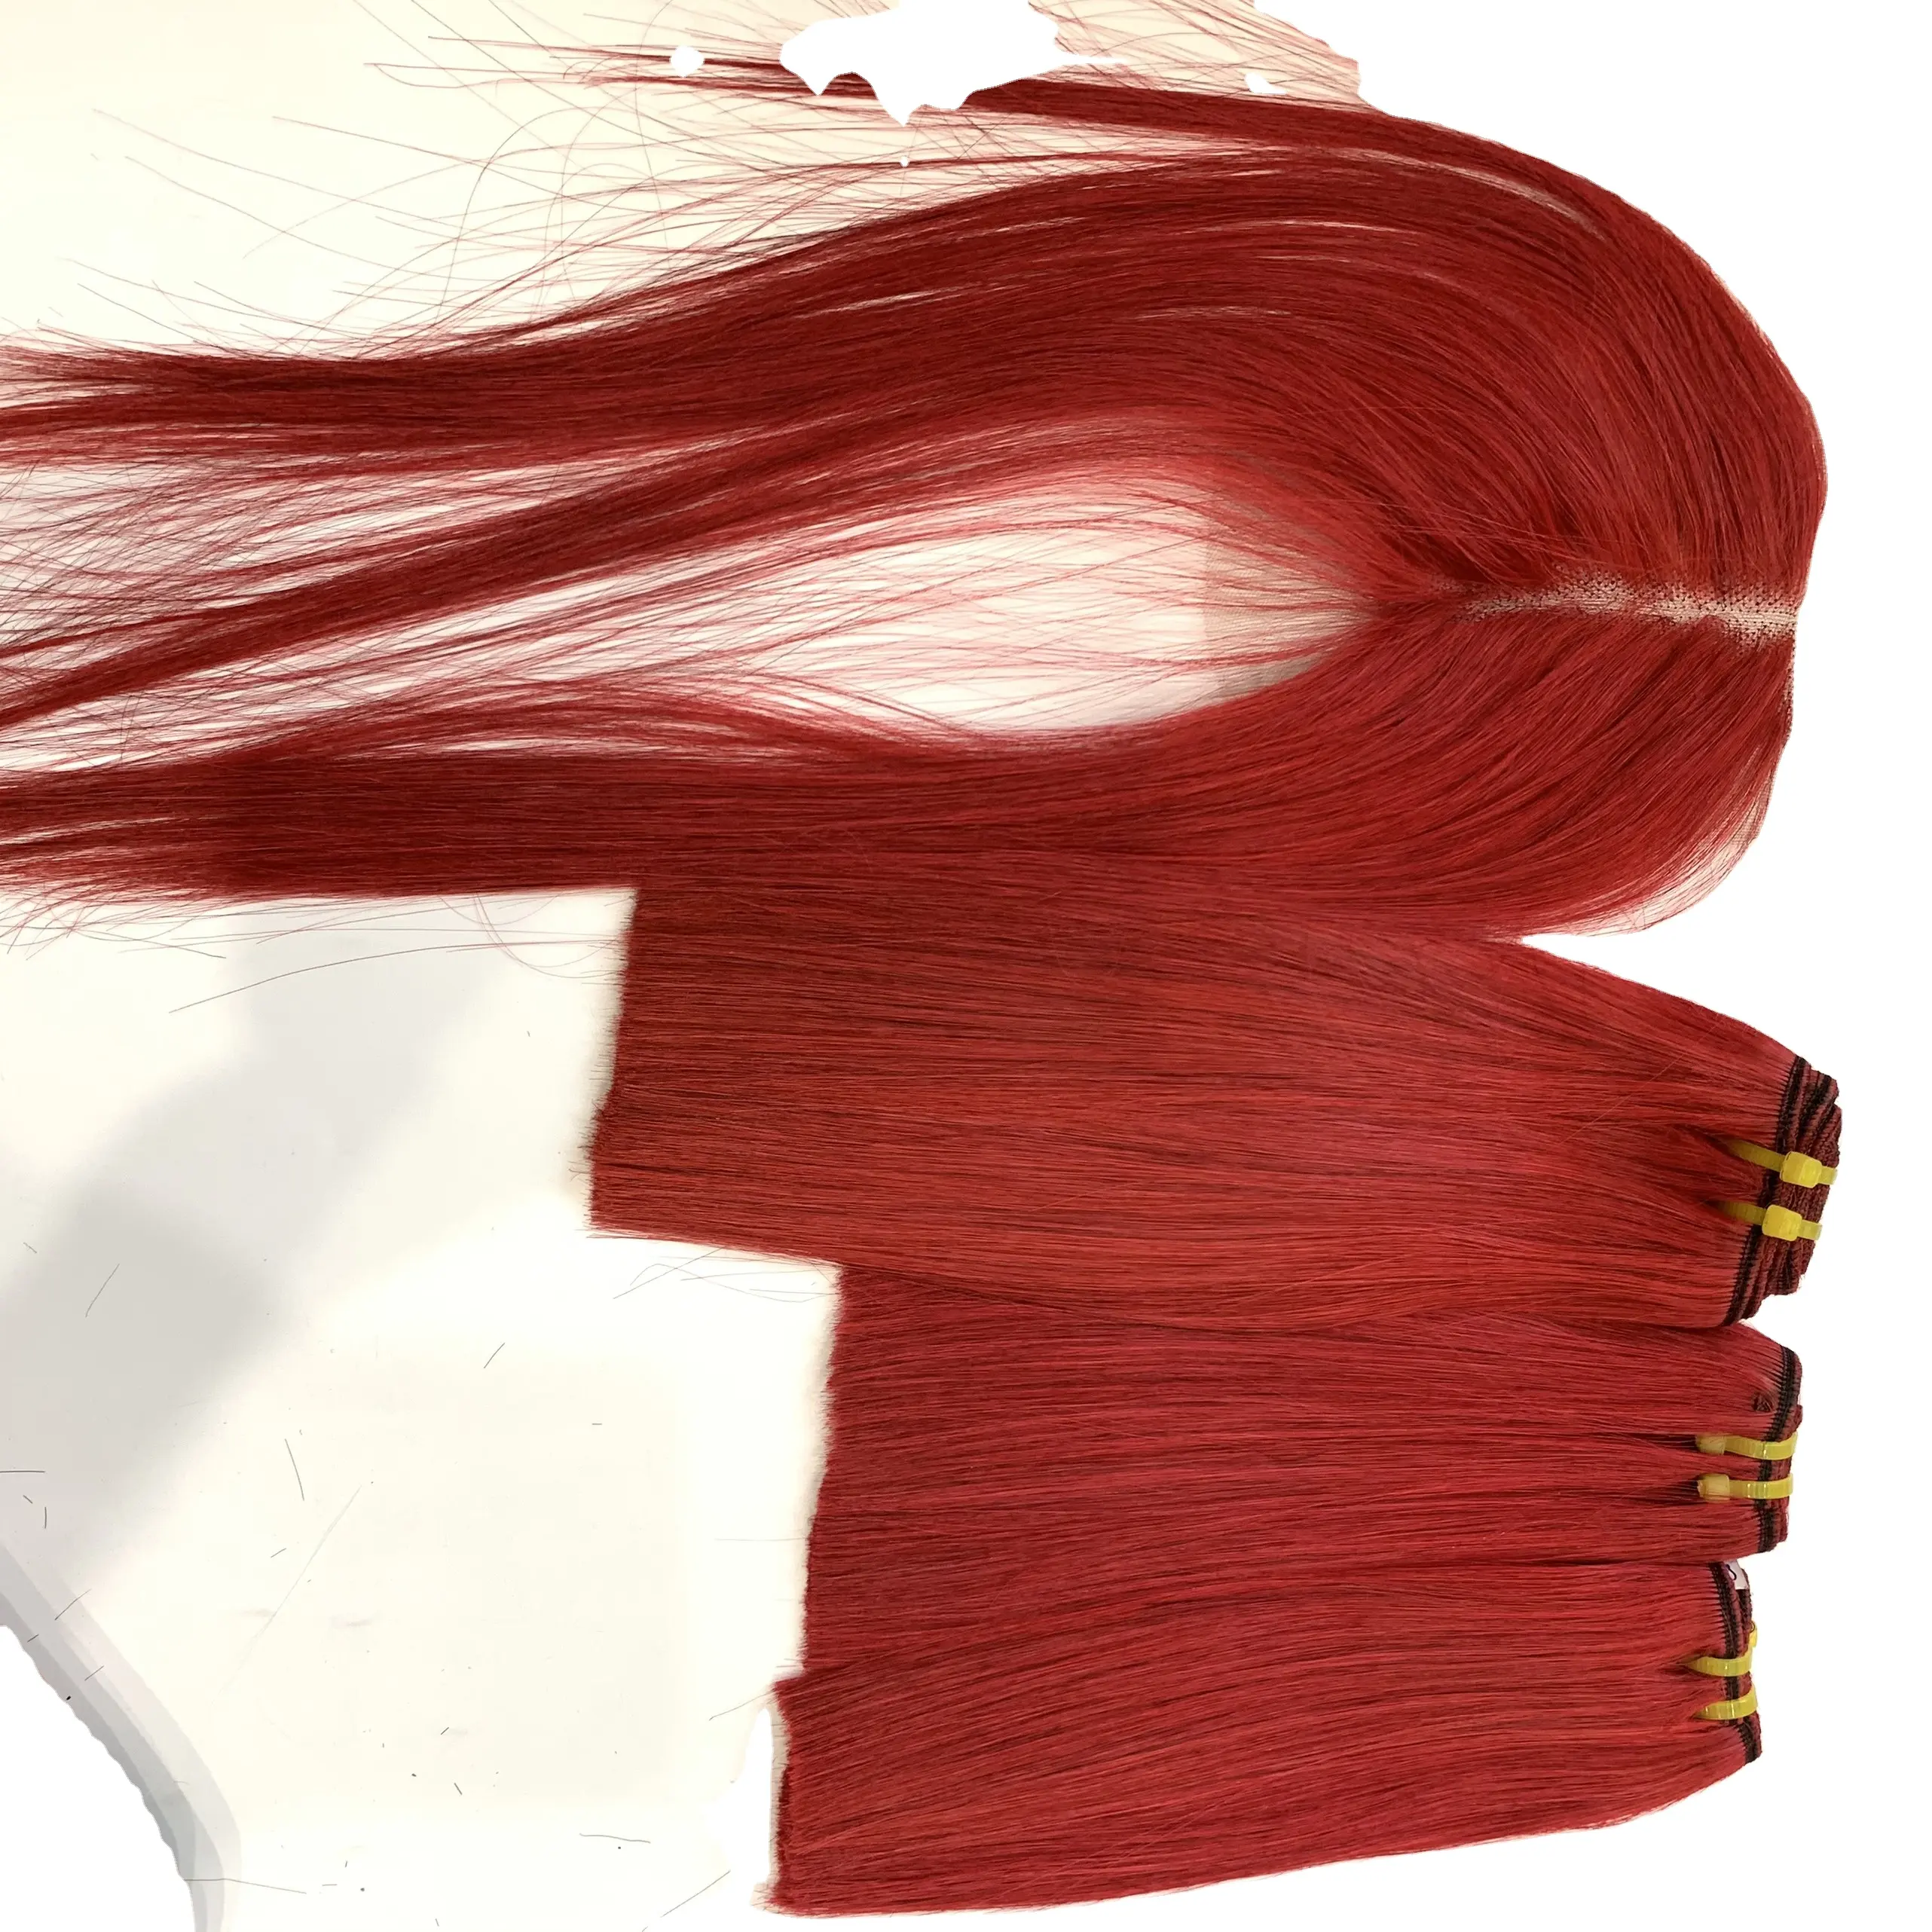 डबल थोक सस्ते में 100 मानव रेमी बाल खींचा सहज क्लिप बाल Extens डीएचएल Fedex शरीर शैली टीएनटी लहर बड़ा ईएमएस रंग घुंघराले